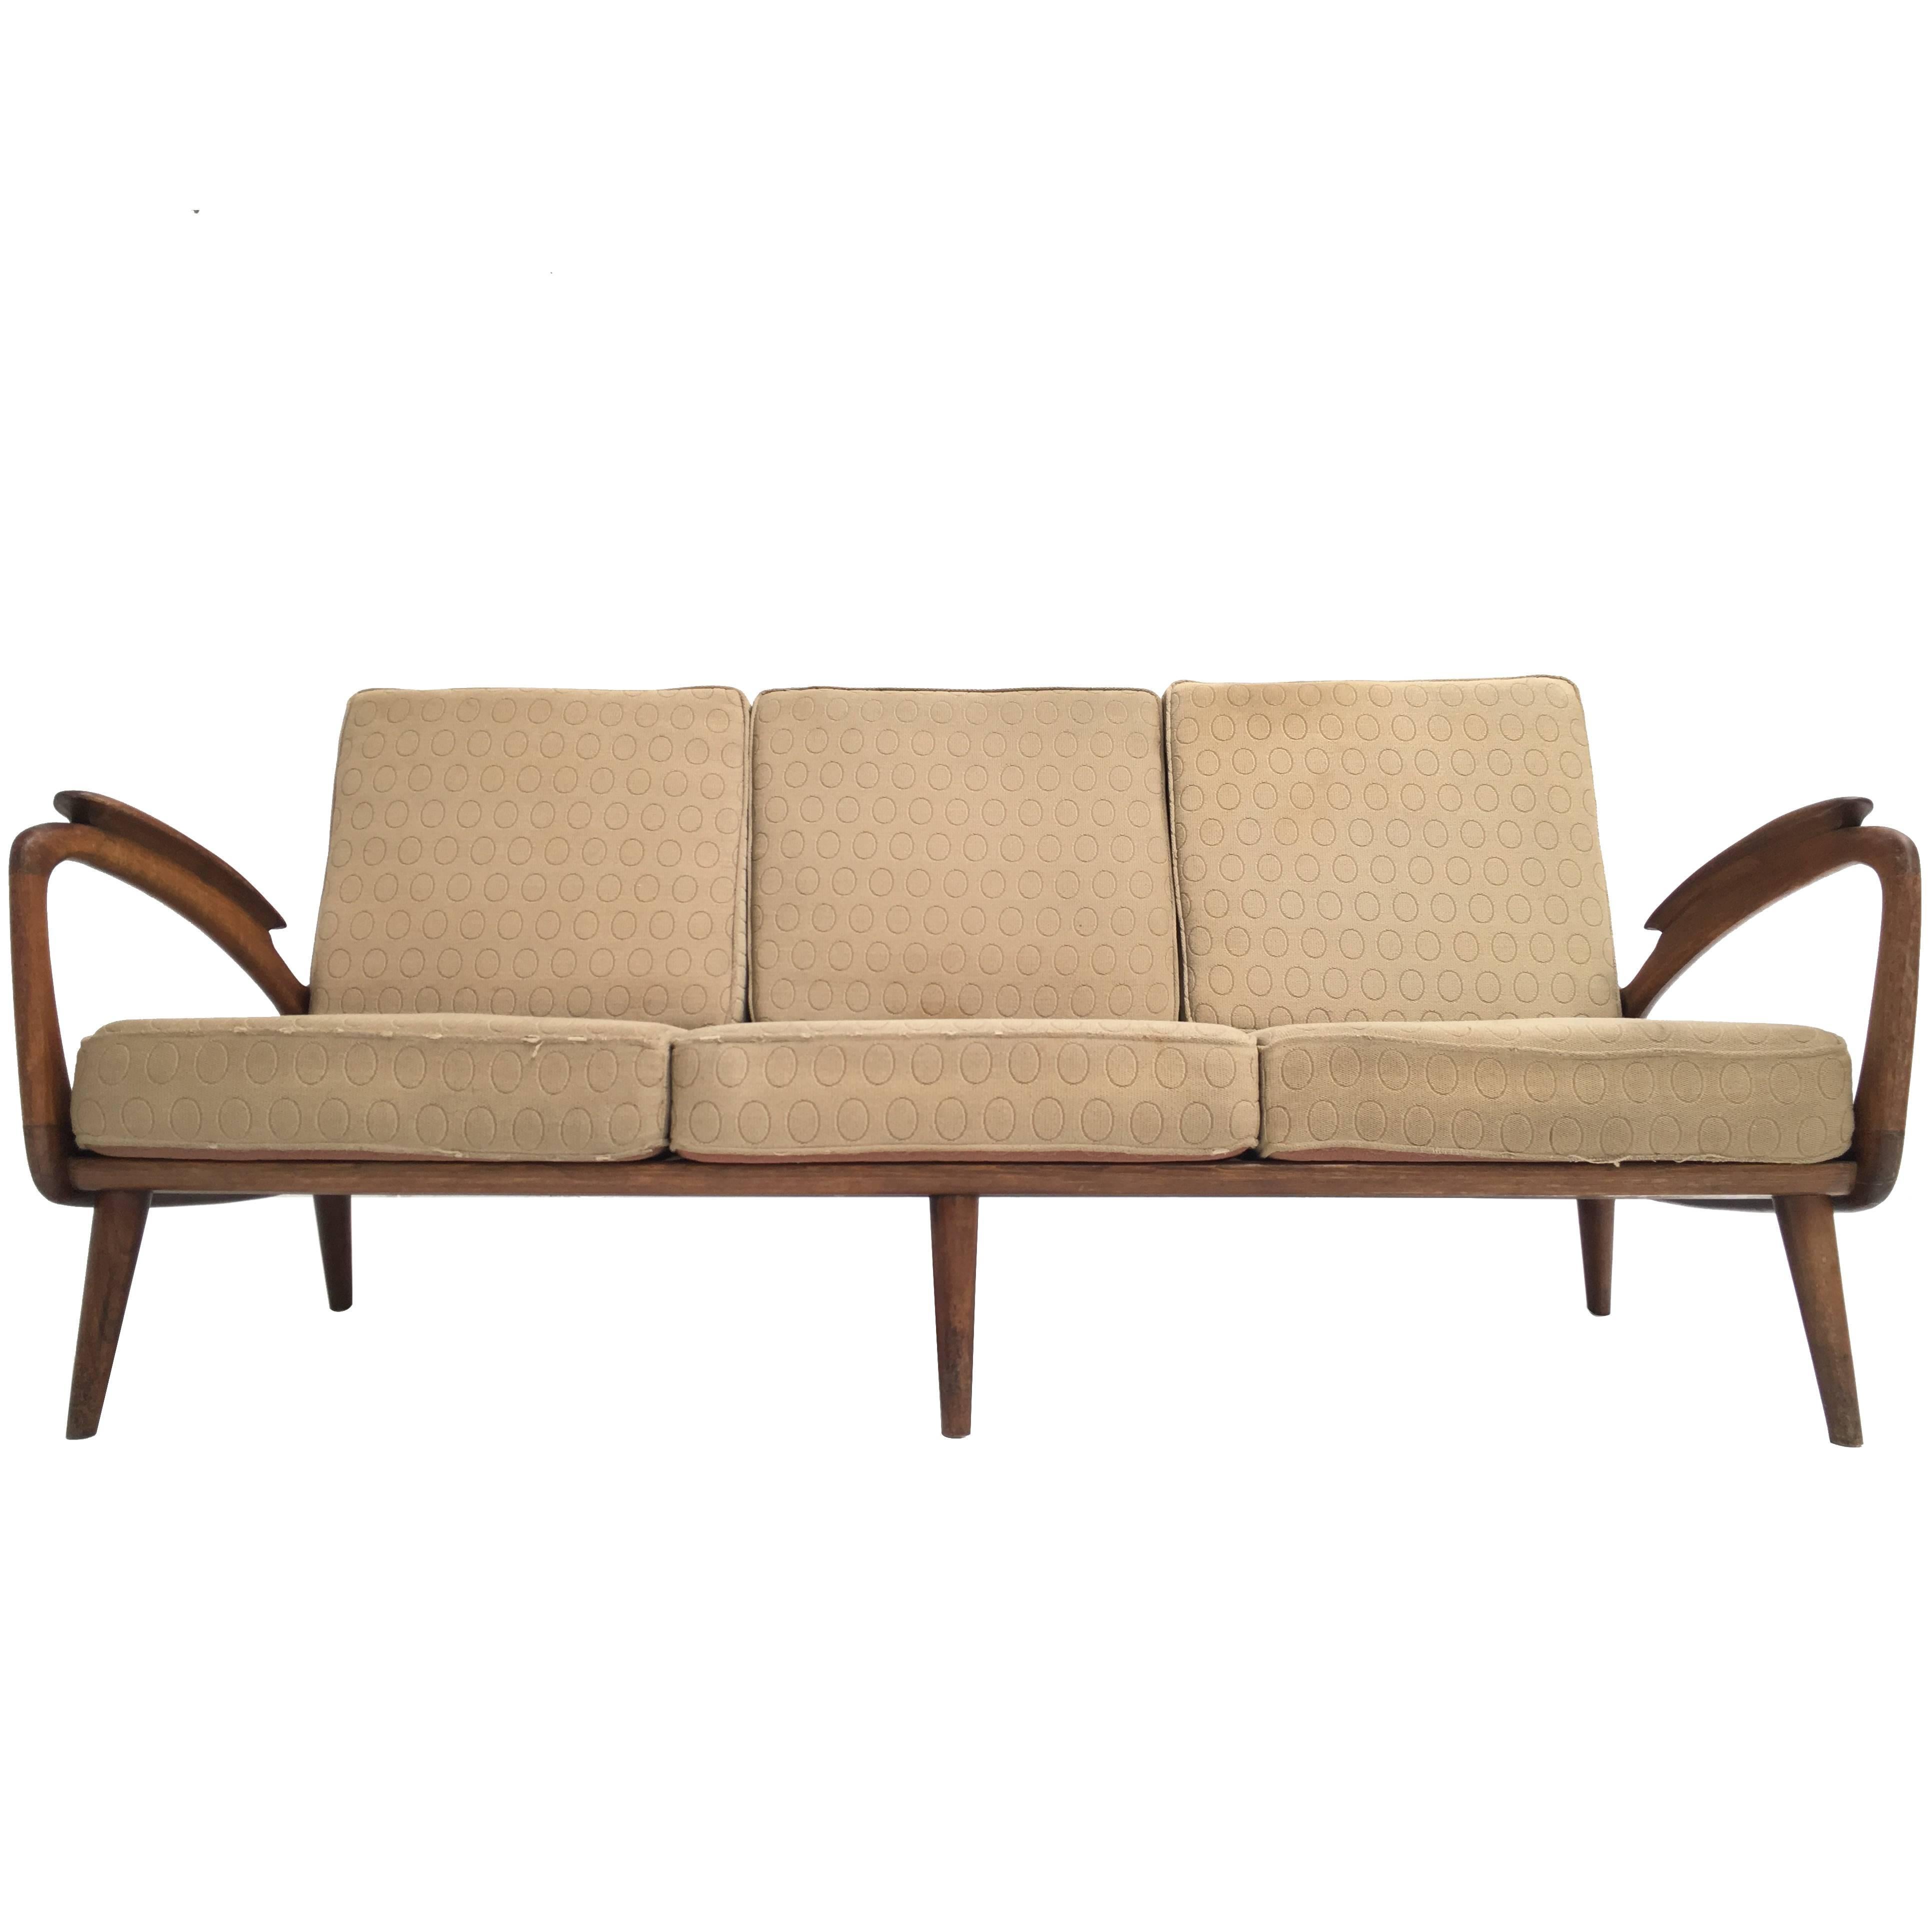 Stunning Dutch De Ster 1950s Organic Carved Walnut Stained Birch Three-Seat Sofa